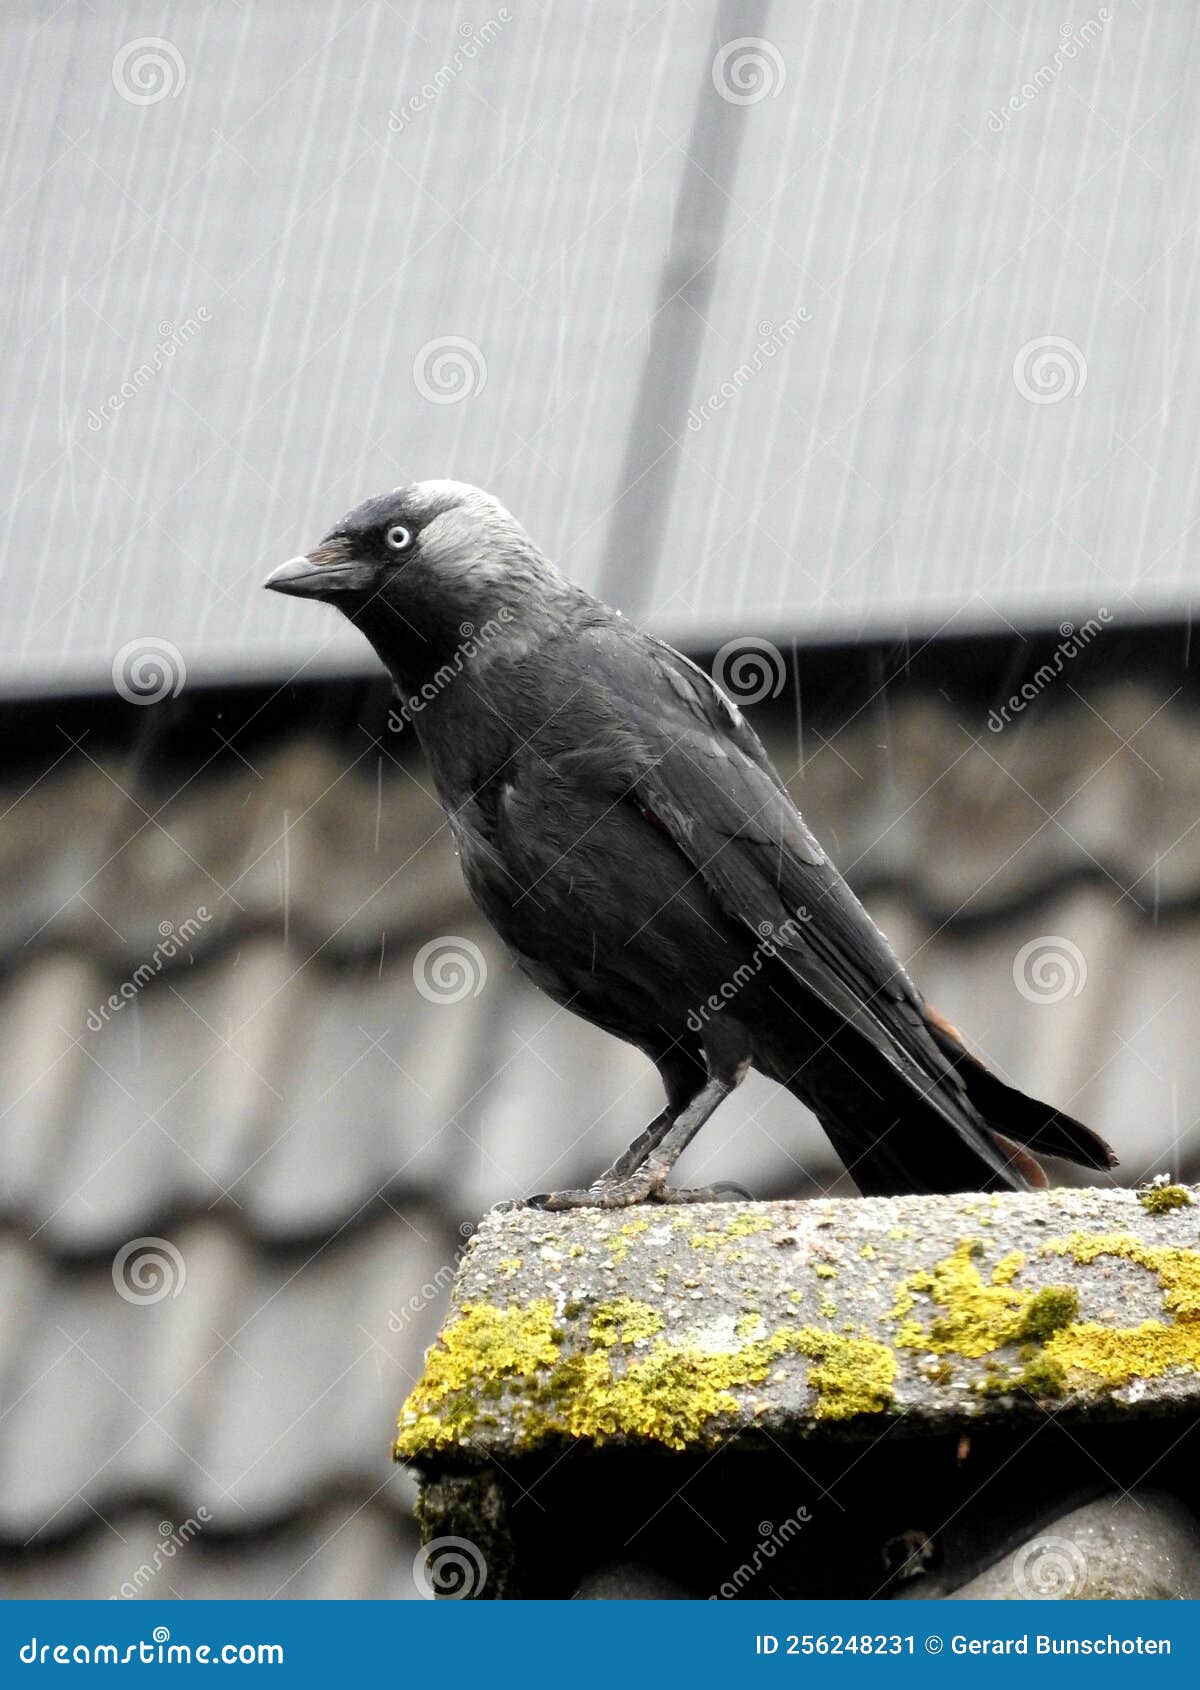 crow kraai gauw vogel bird dak roof black zwart veren feather feathers regen rain mos life dieren animals animal